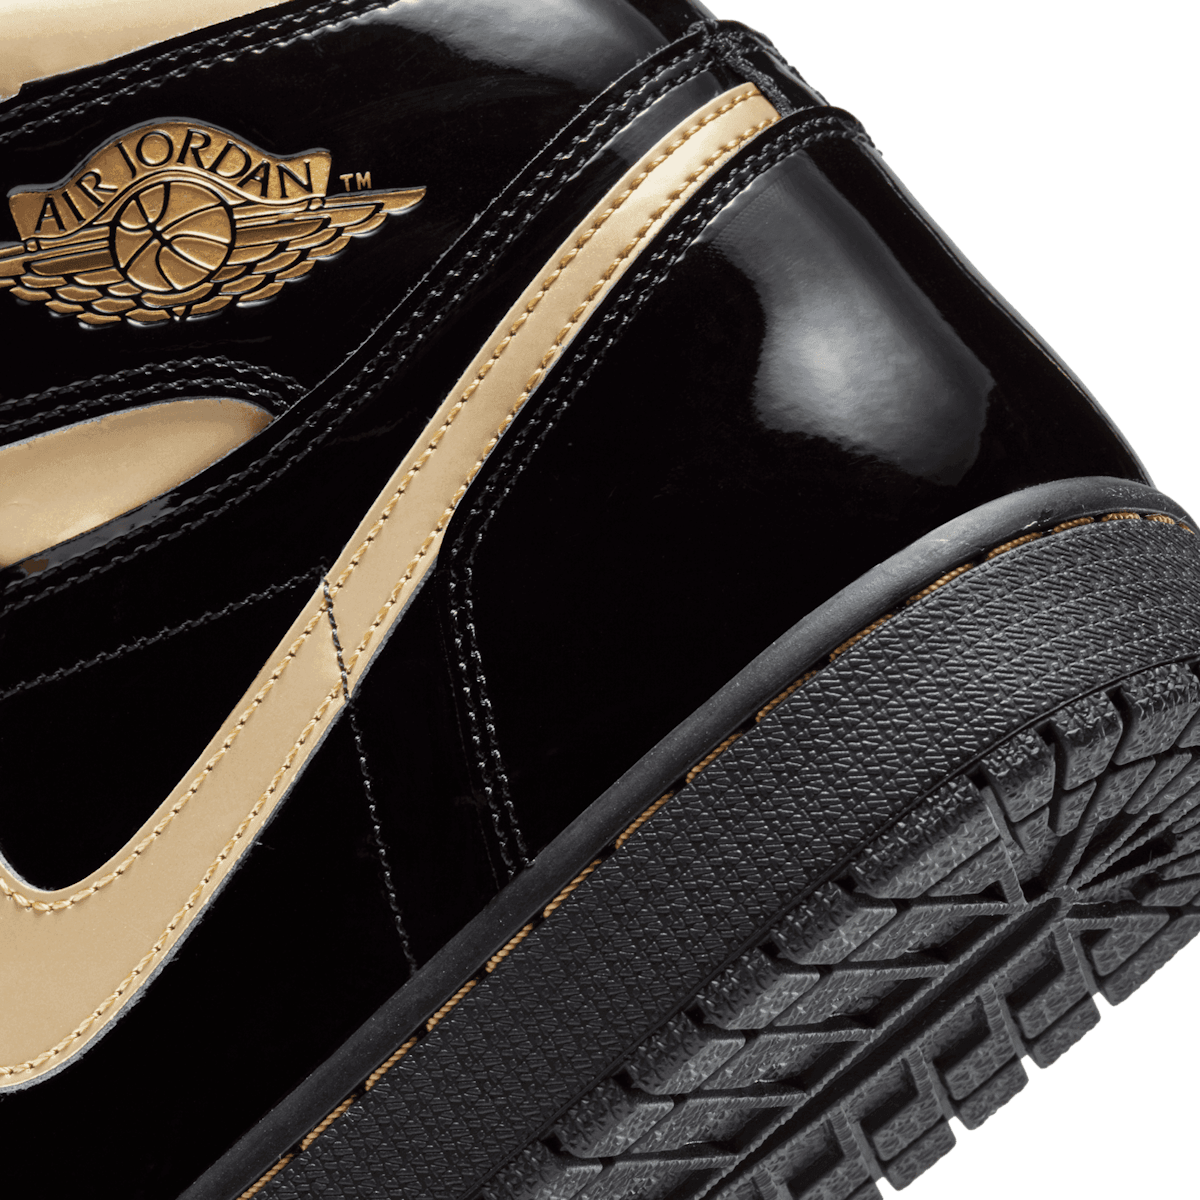 Air Jordan 1 Retro High Black Metallic Gold - 555088-032 Raffles